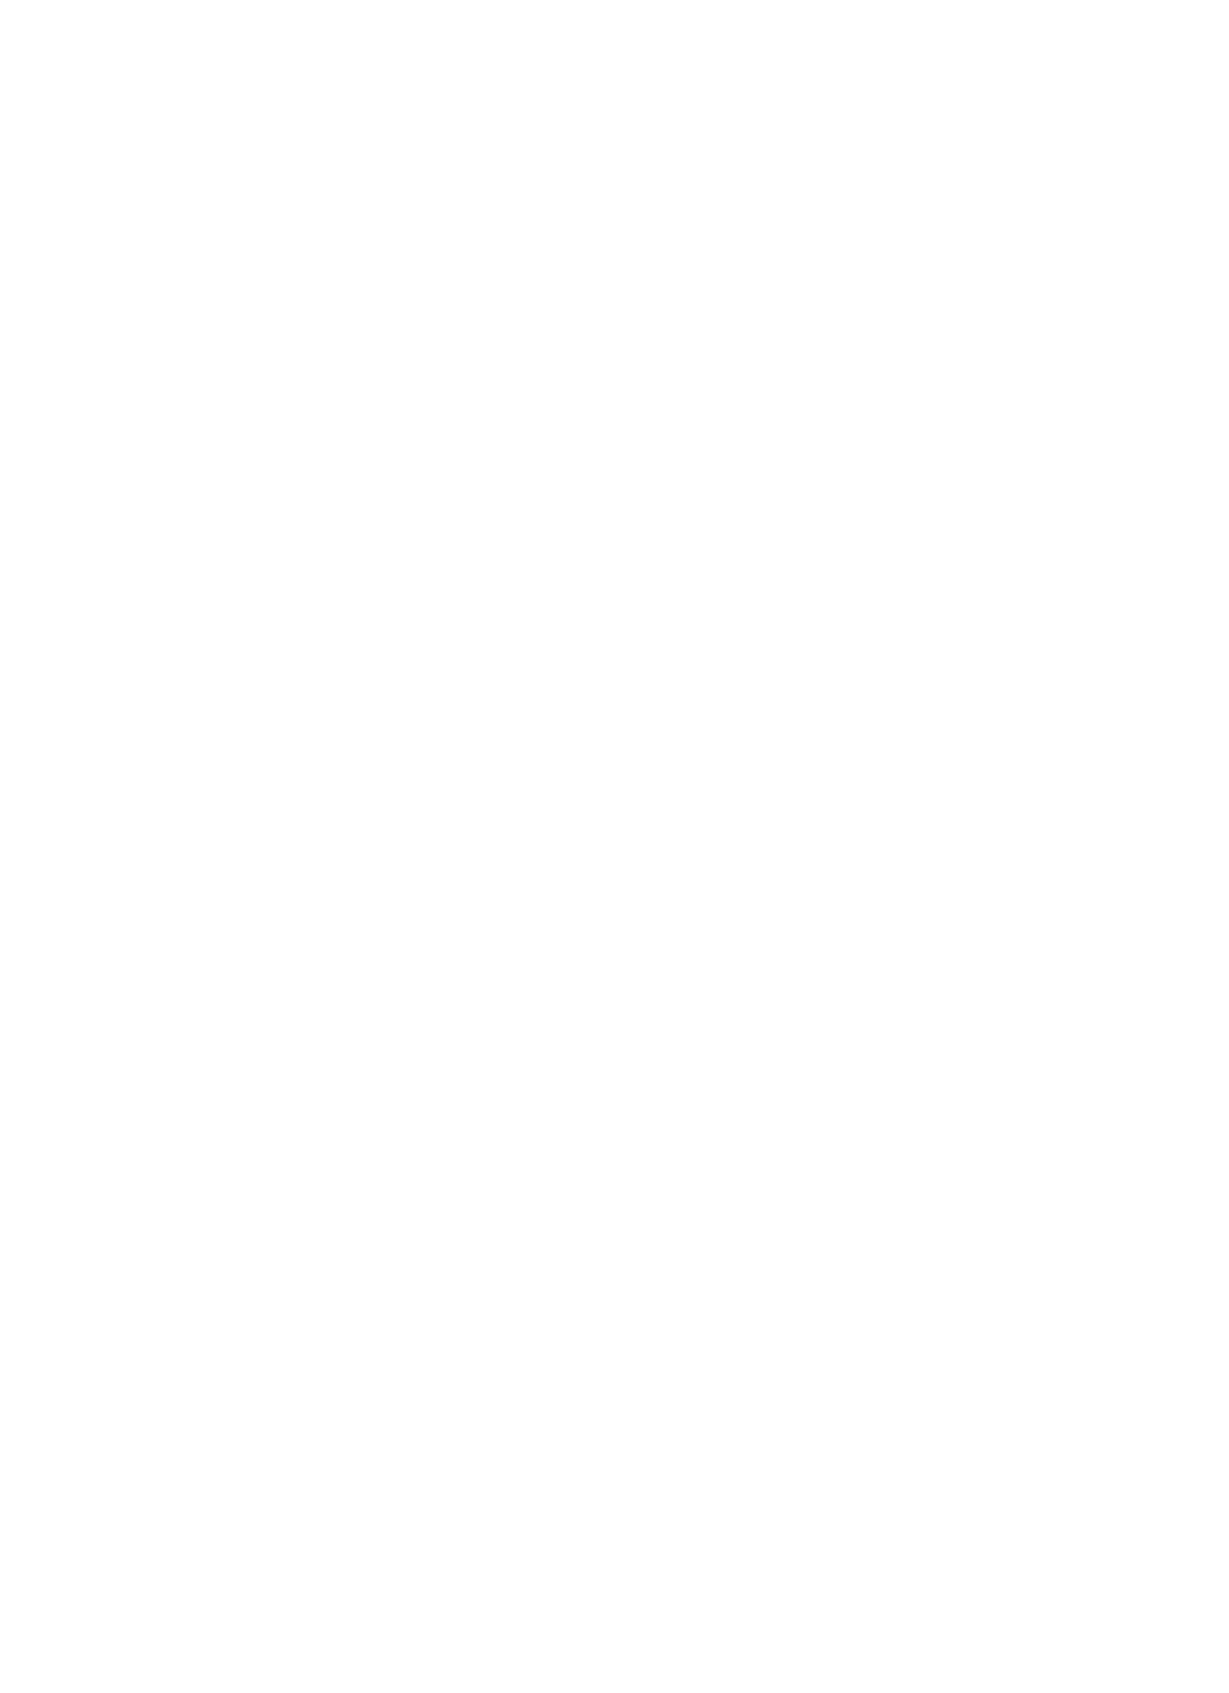 Rent the Runway logo for dark backgrounds (transparent PNG)